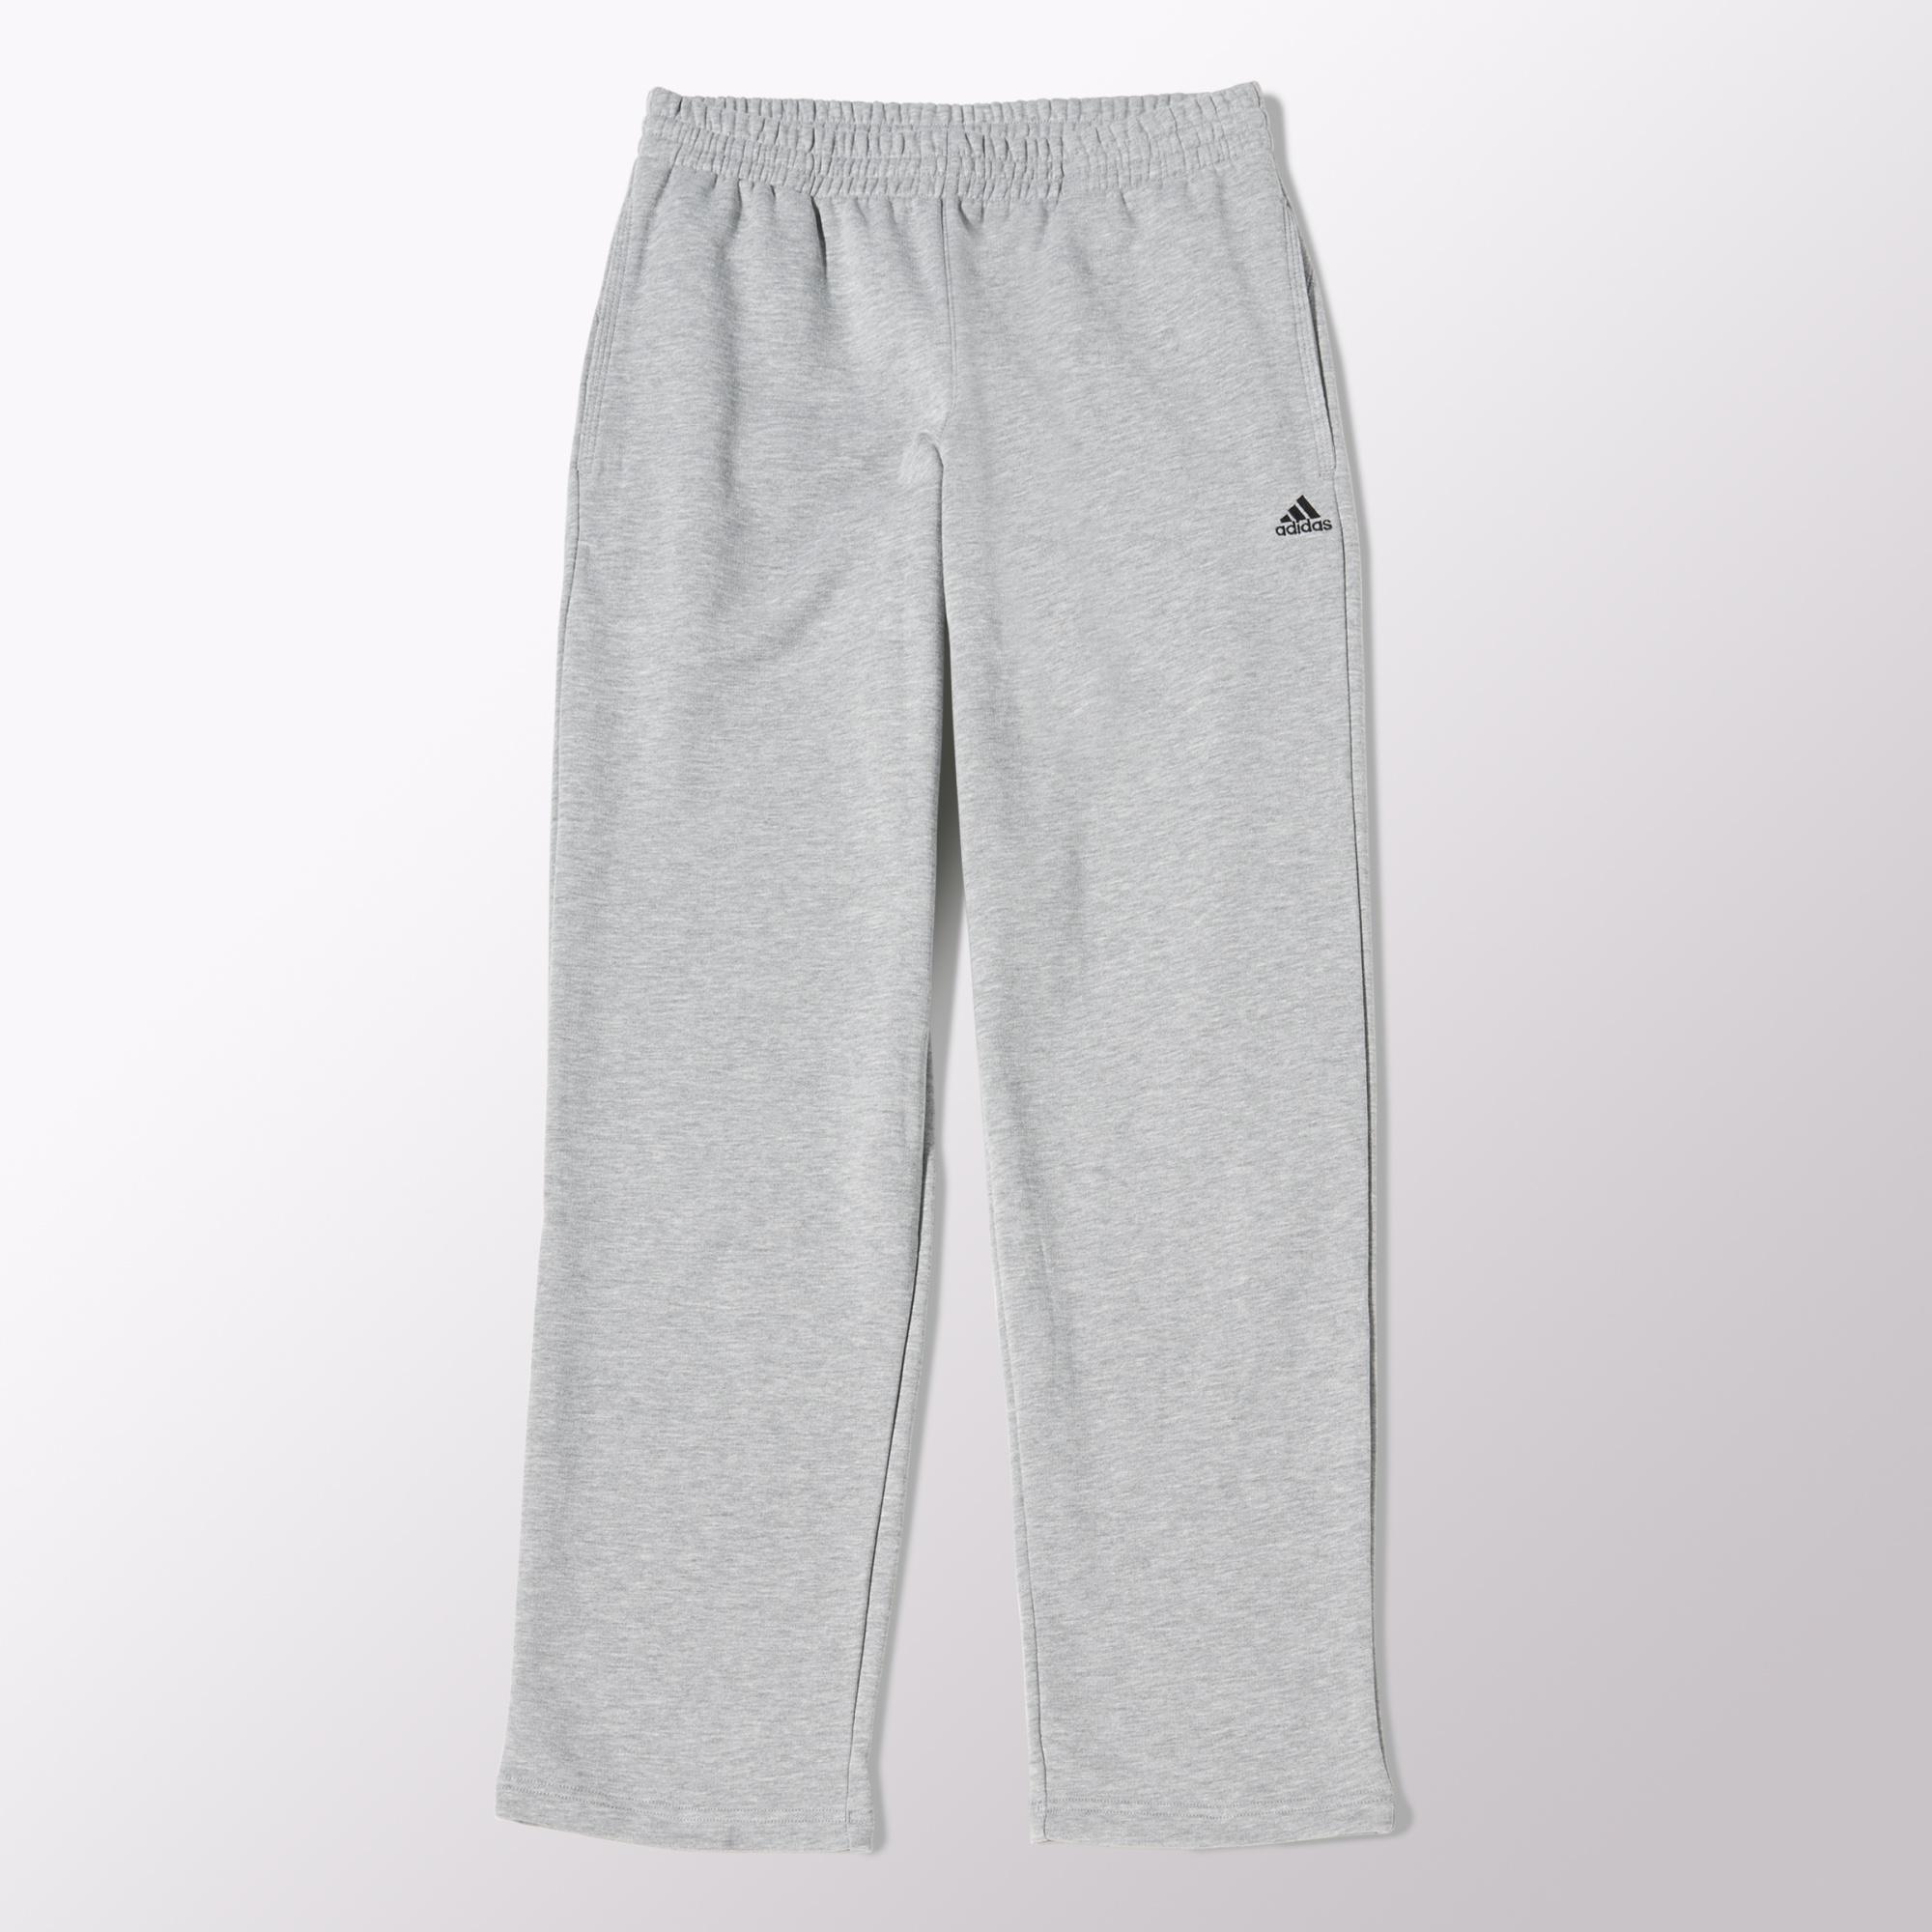 Adidas Mens Essential Sweat Pant - Grey - Tennisnuts.com